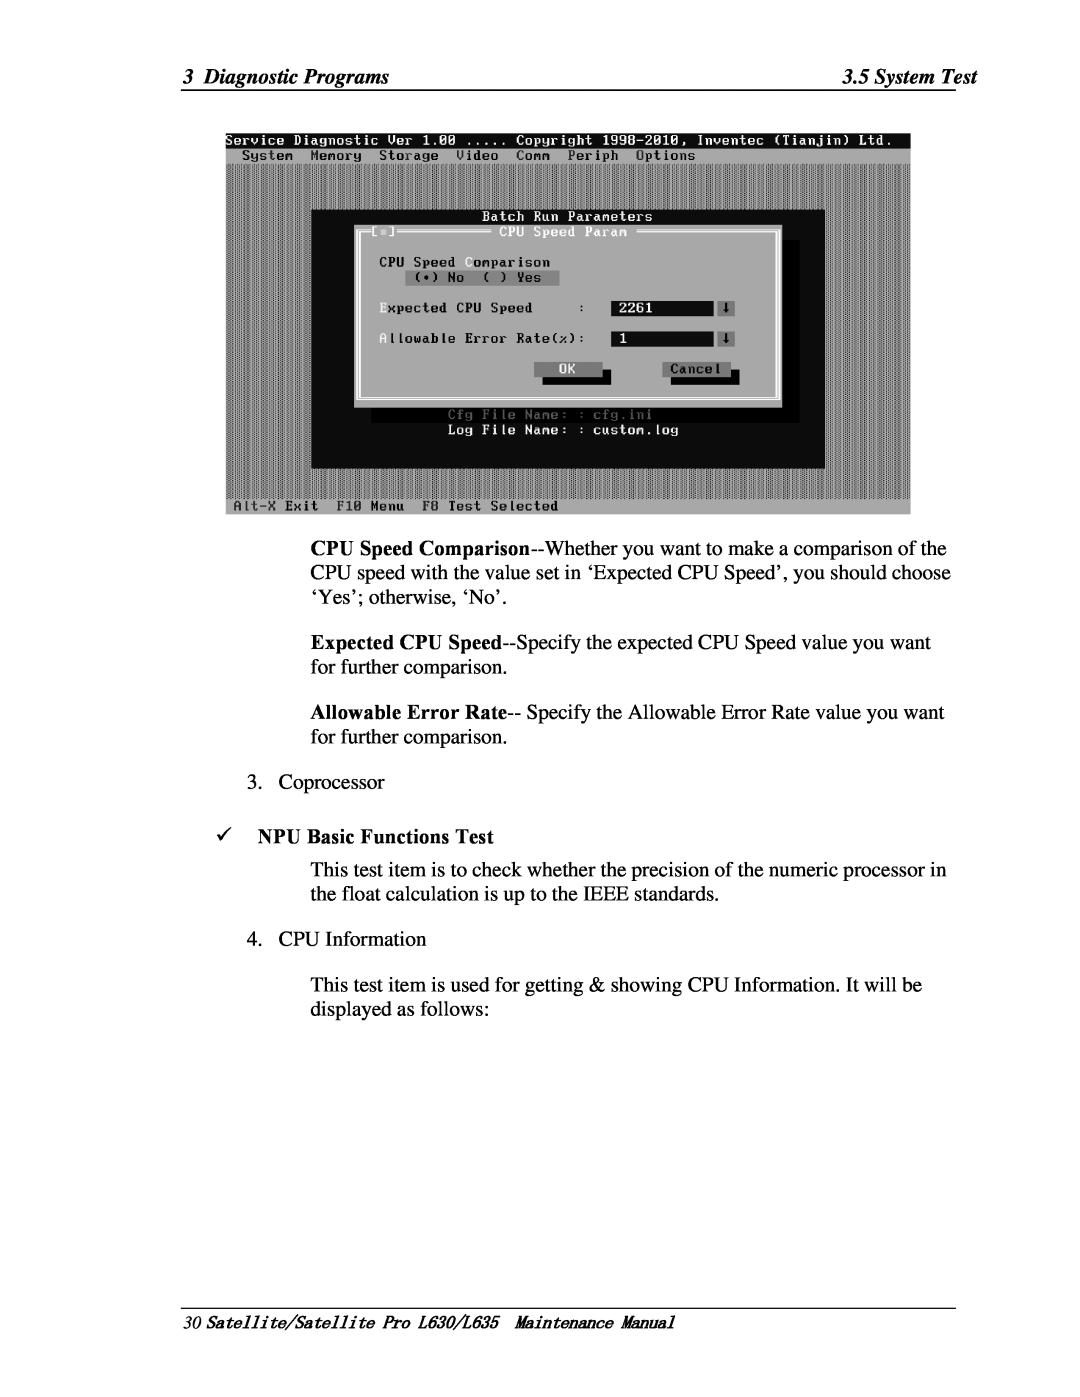 Toshiba L635, L630 manual  NPU Basic Functions Test 